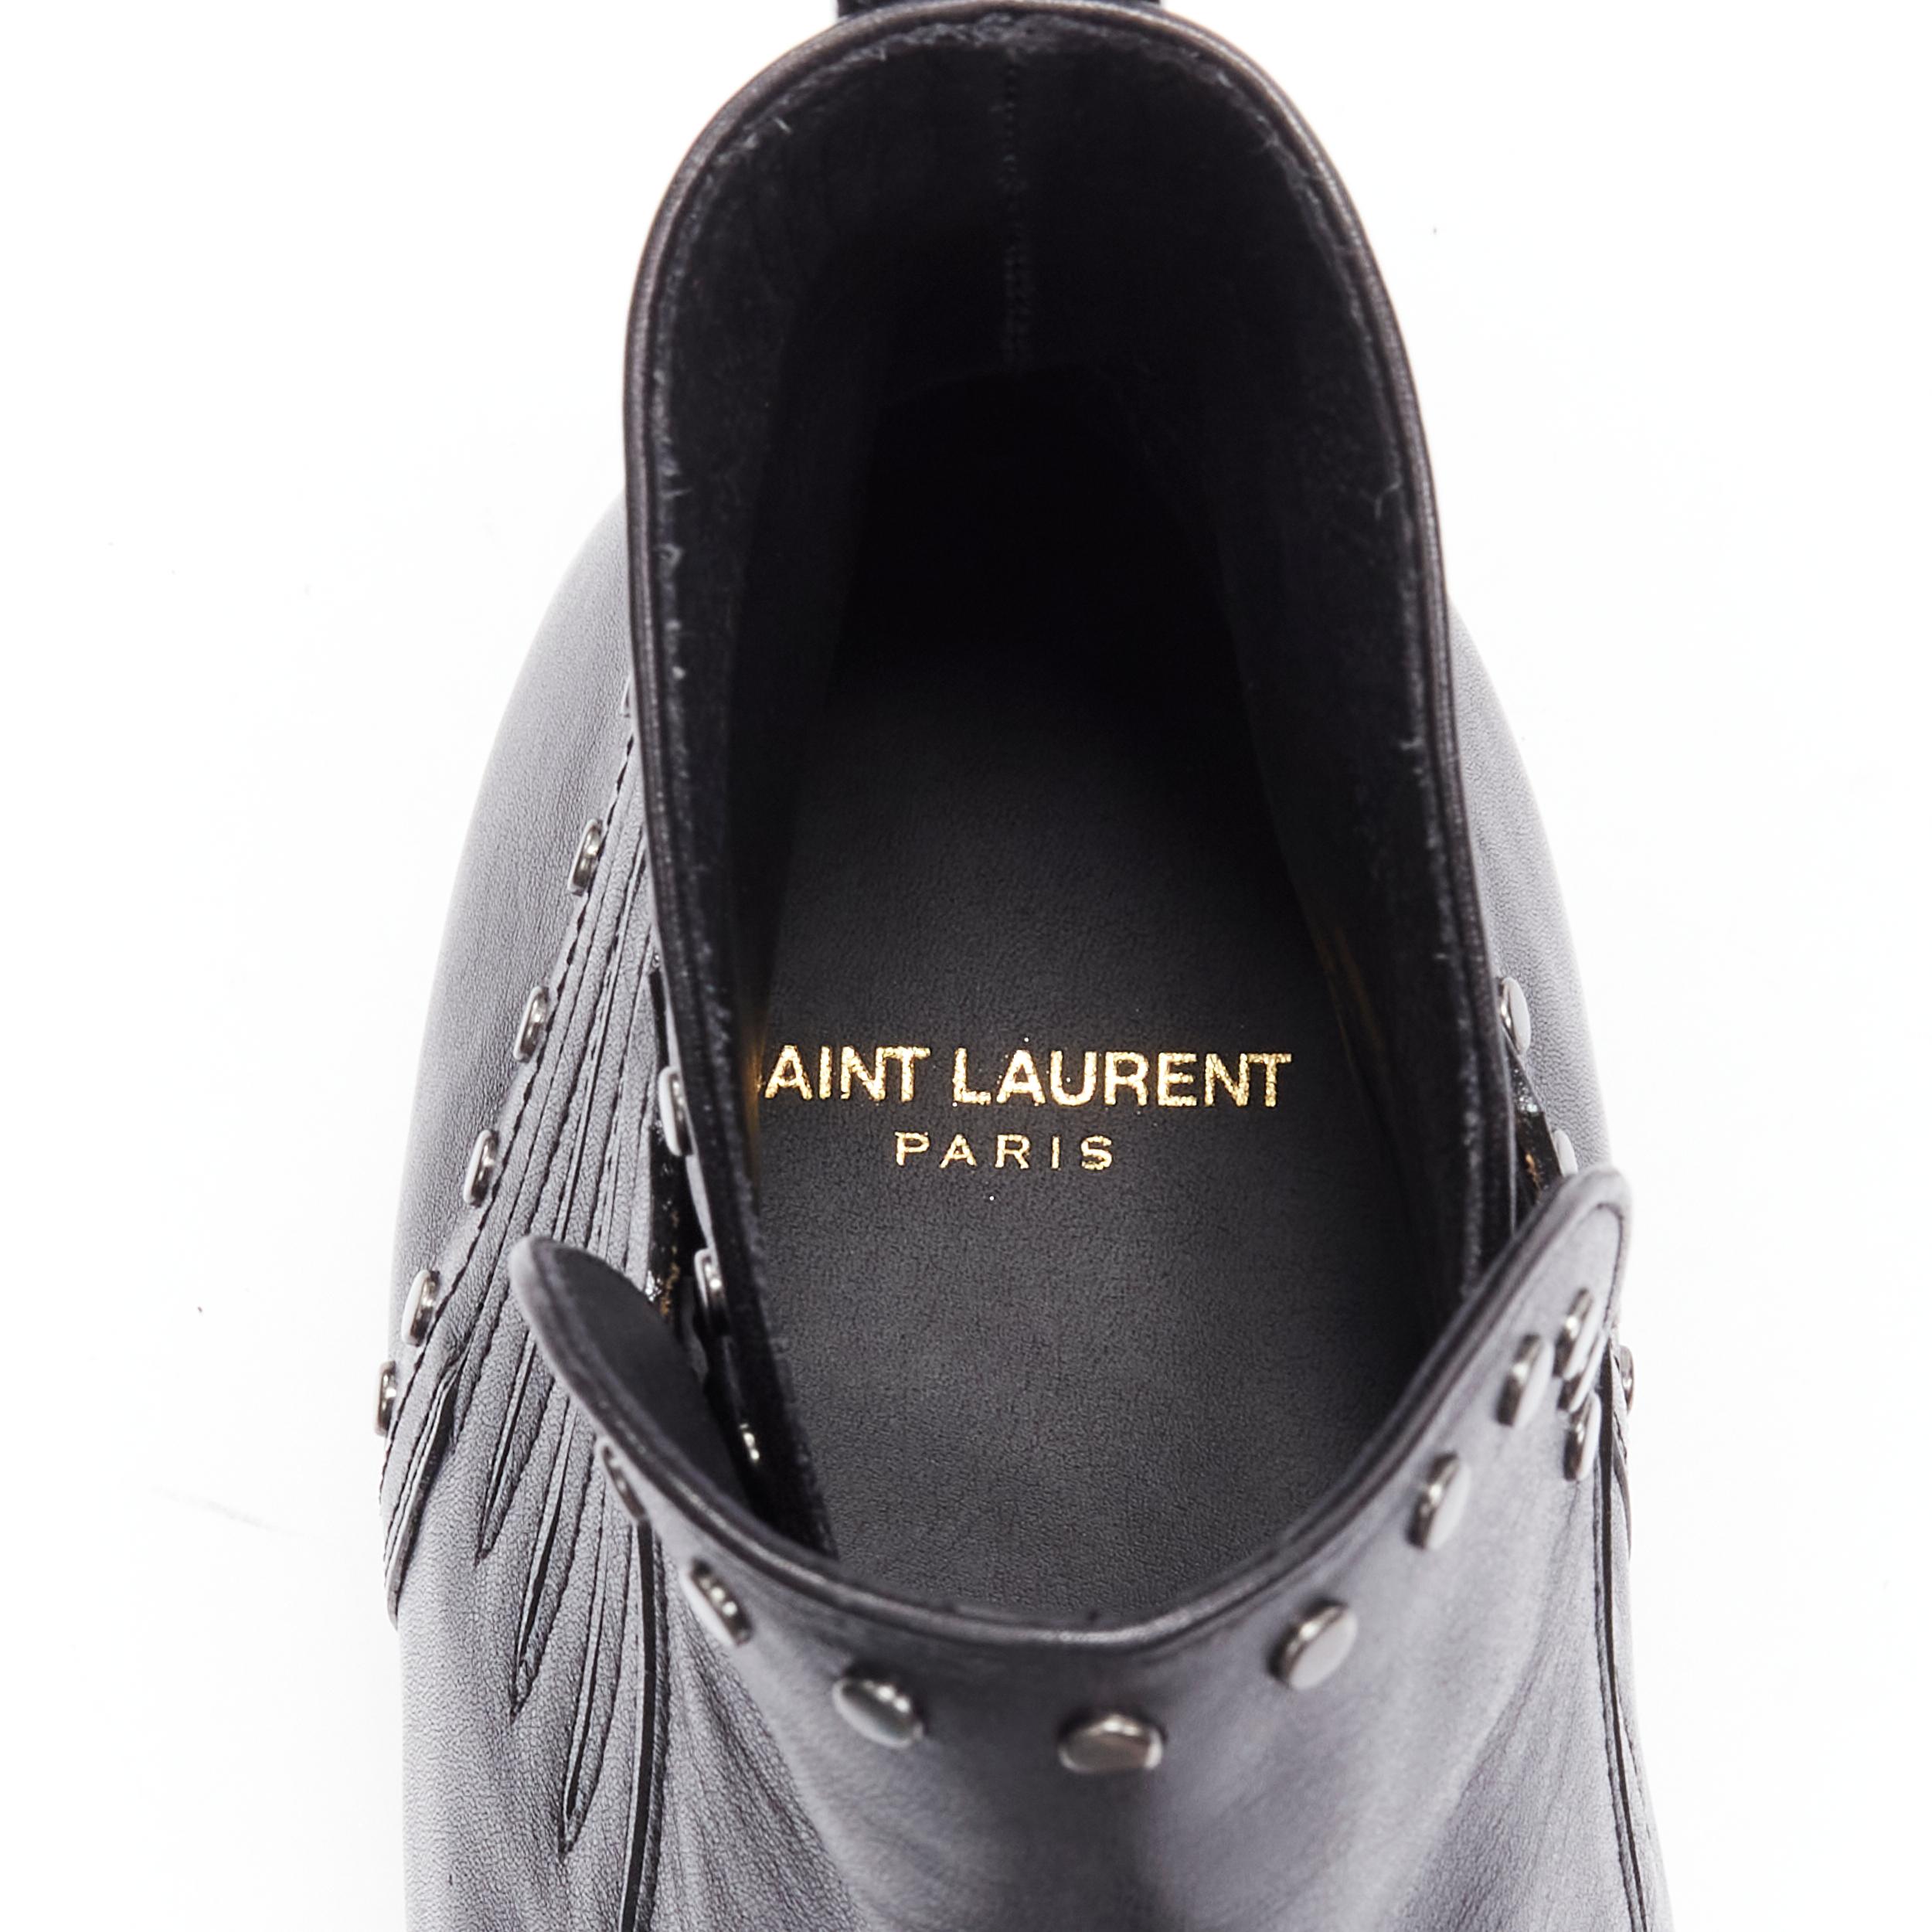 new SAINT LAURENT Dakota 50 black leather studded western ankle boot EU43 4